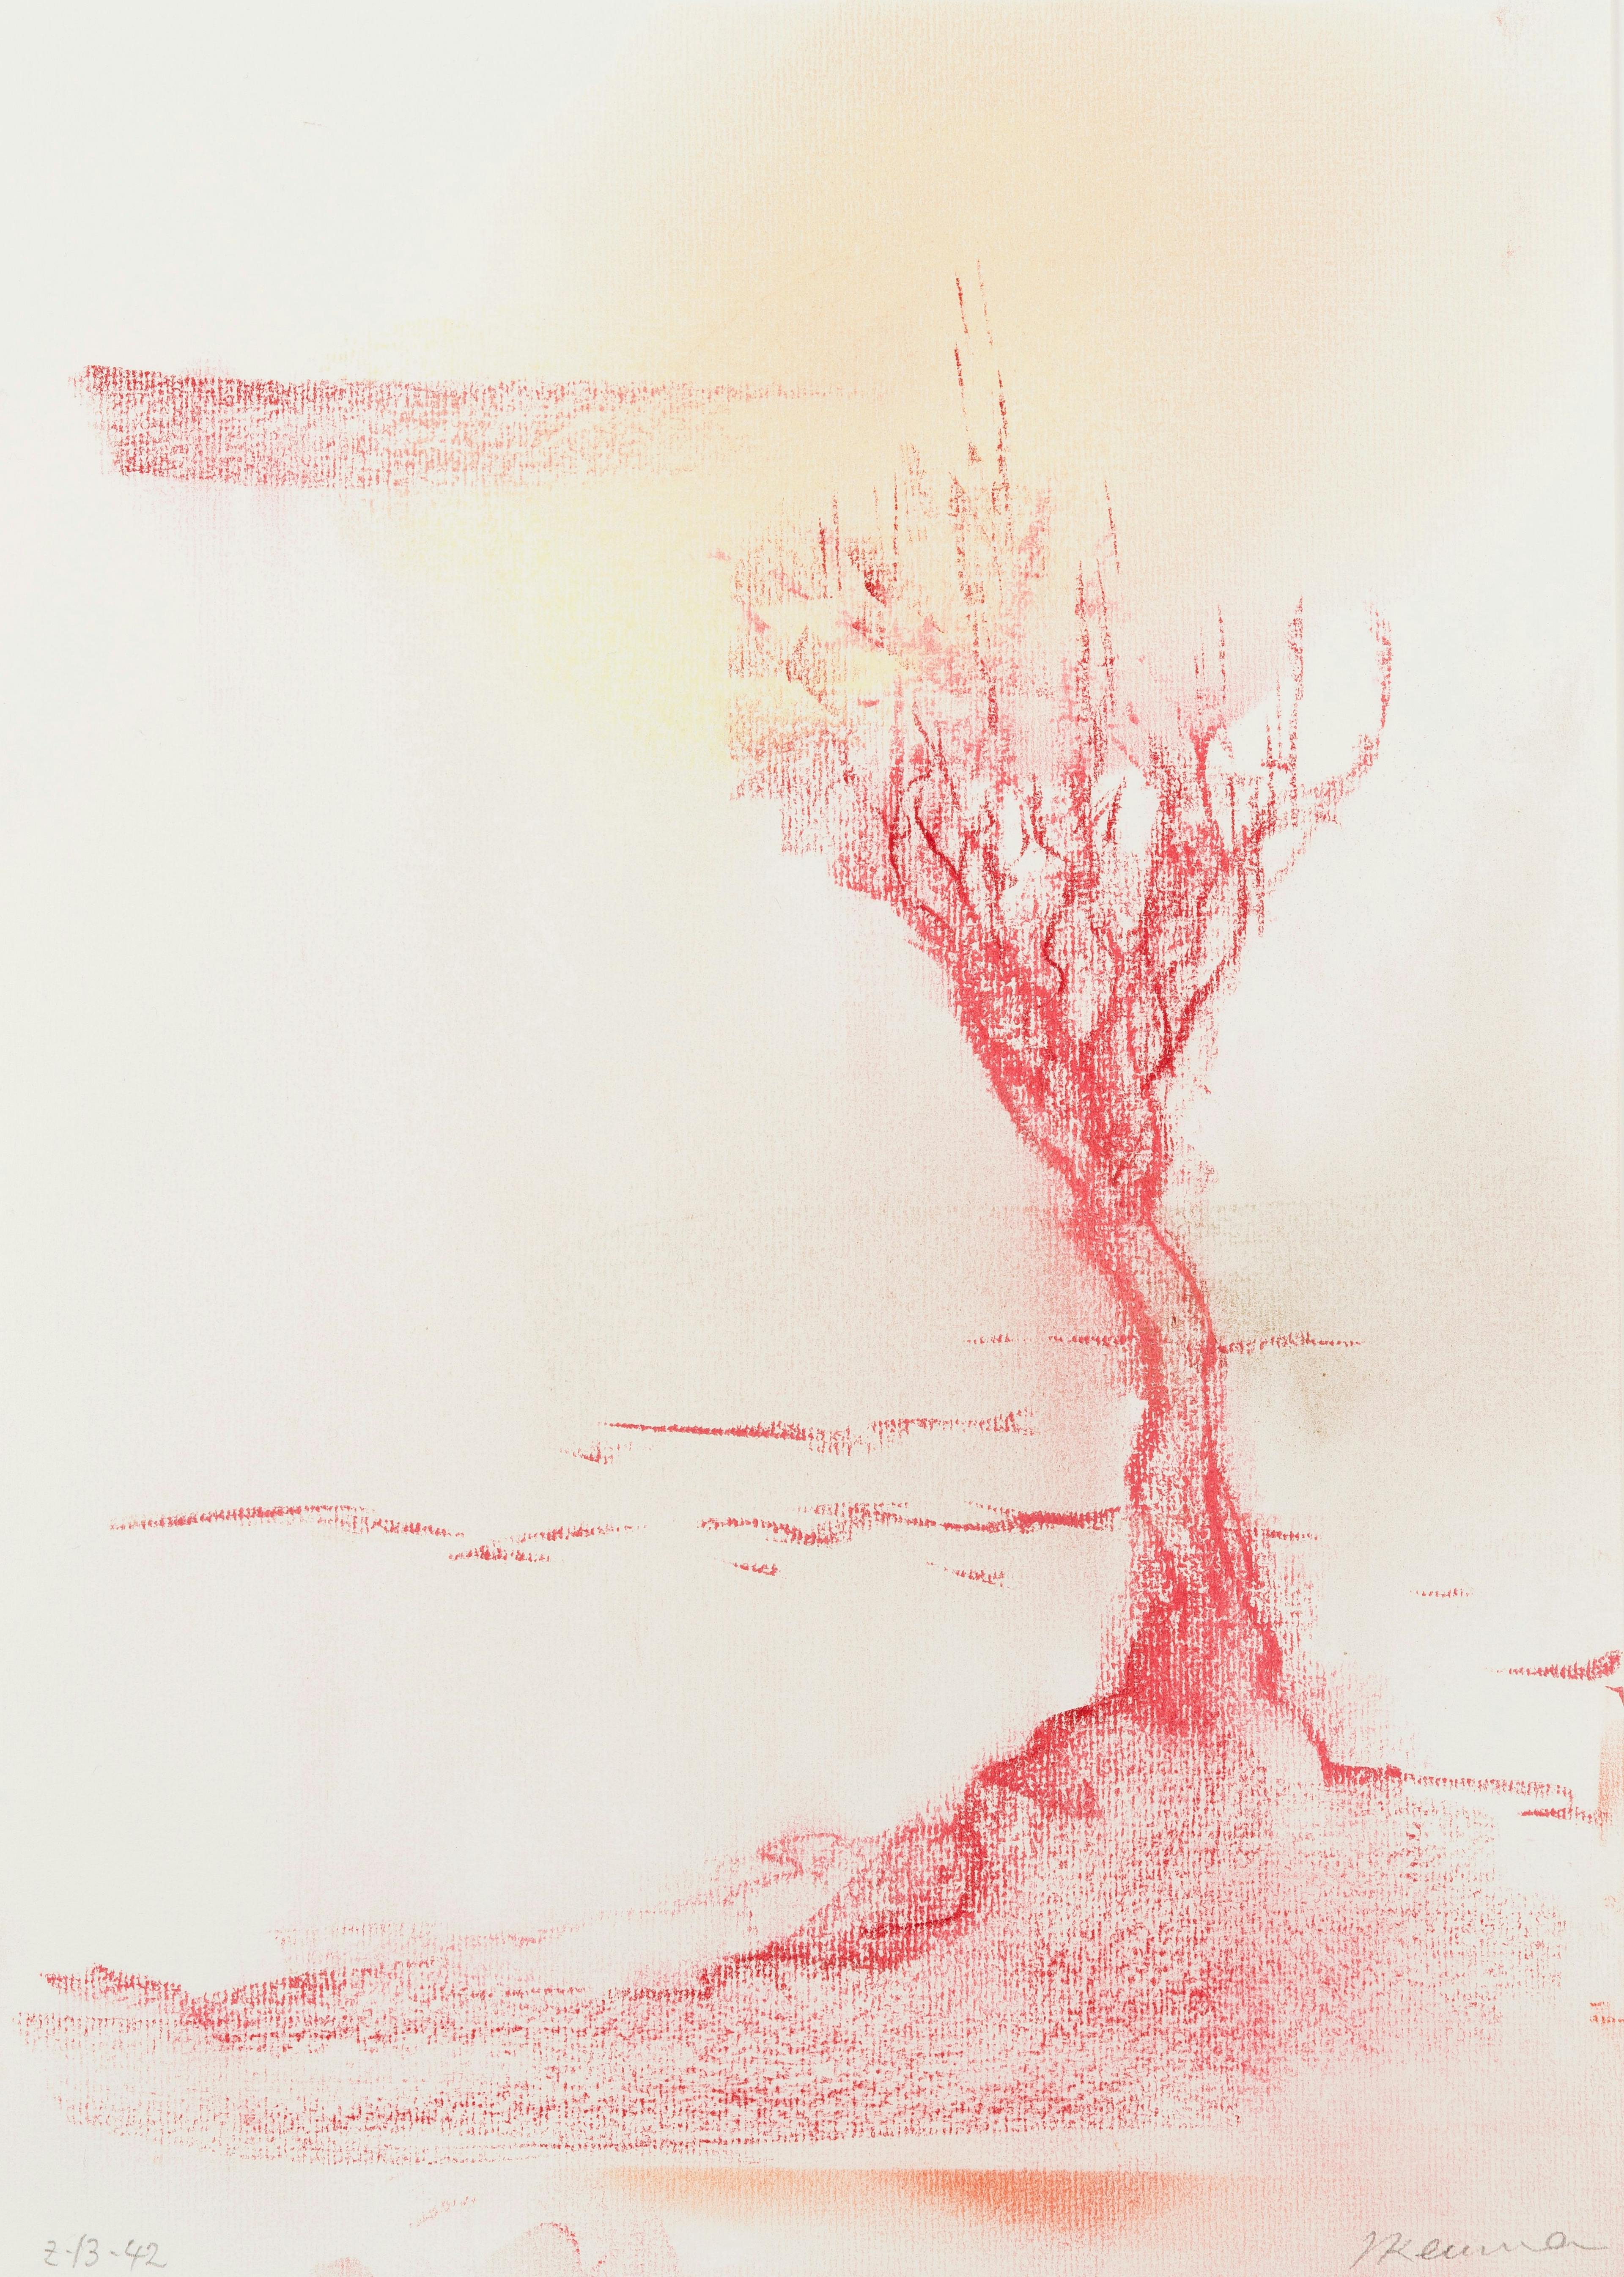 Leiko Ikemura, Red Tree and Yellow Cloud, 2013